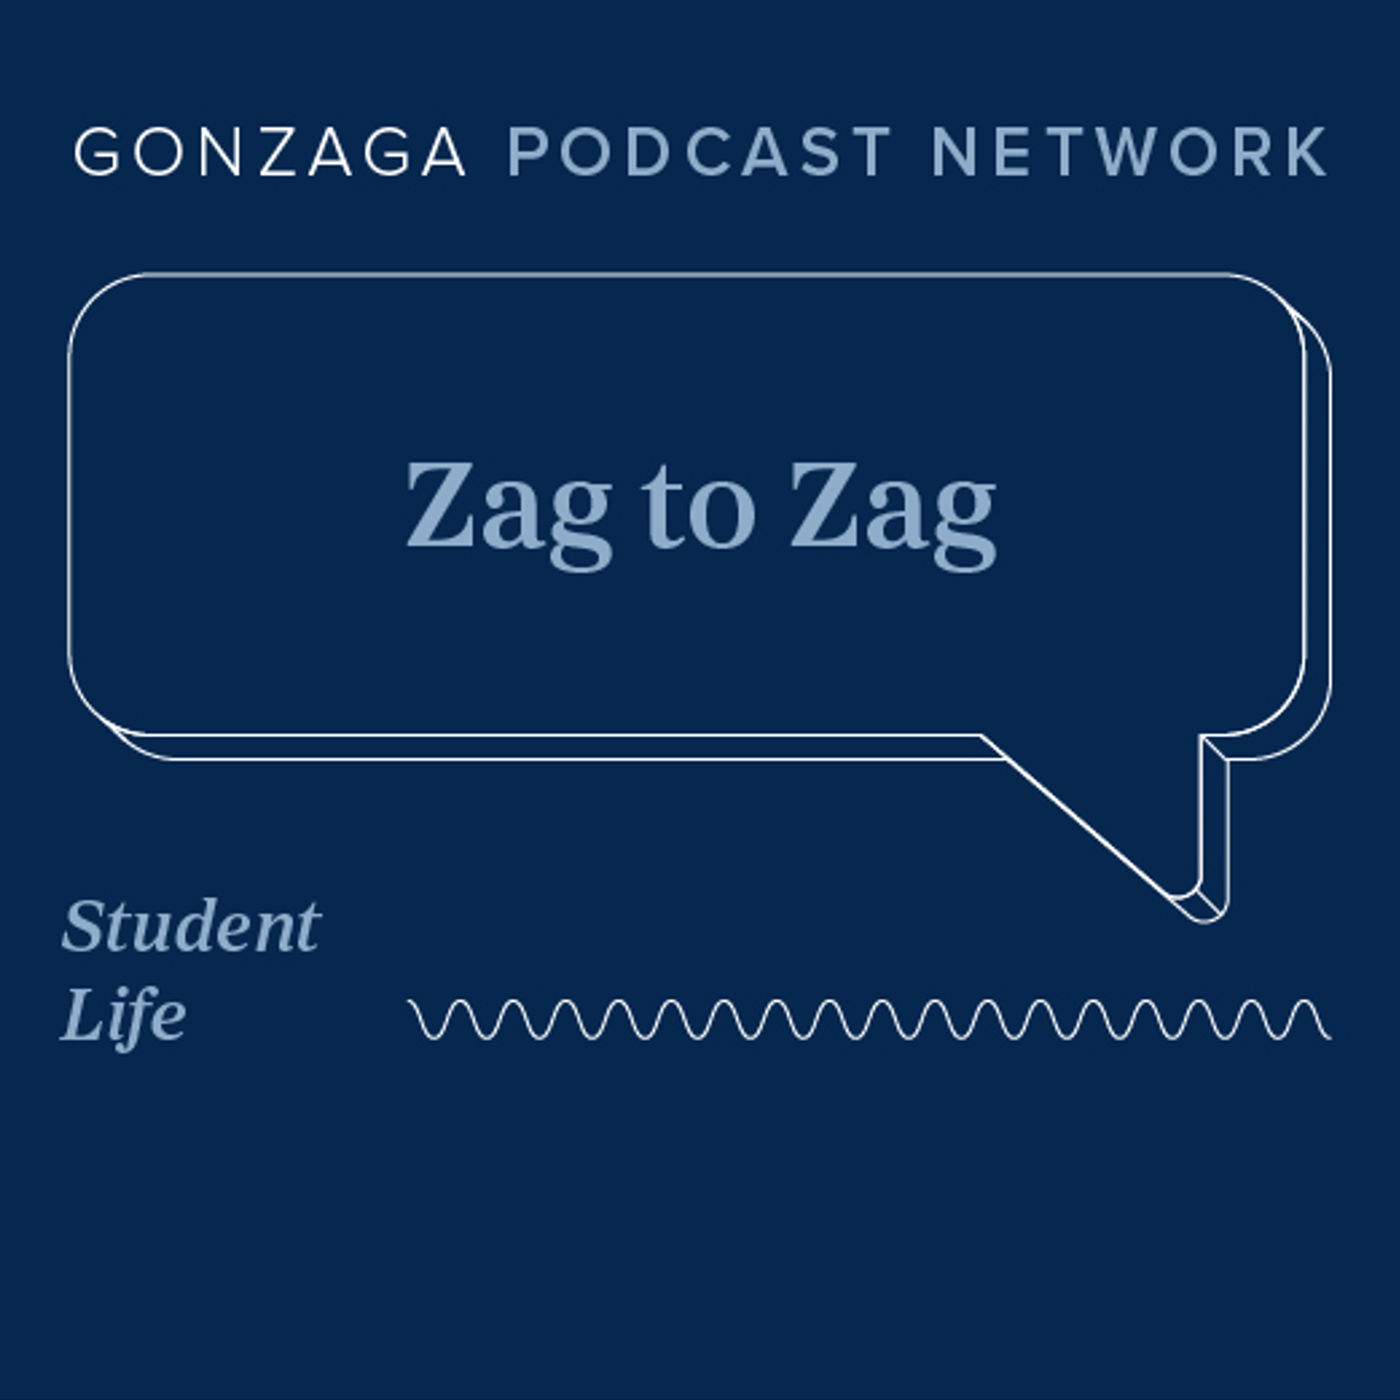 What Gonzaga Traditions do Zags Love? | Zag To Zag